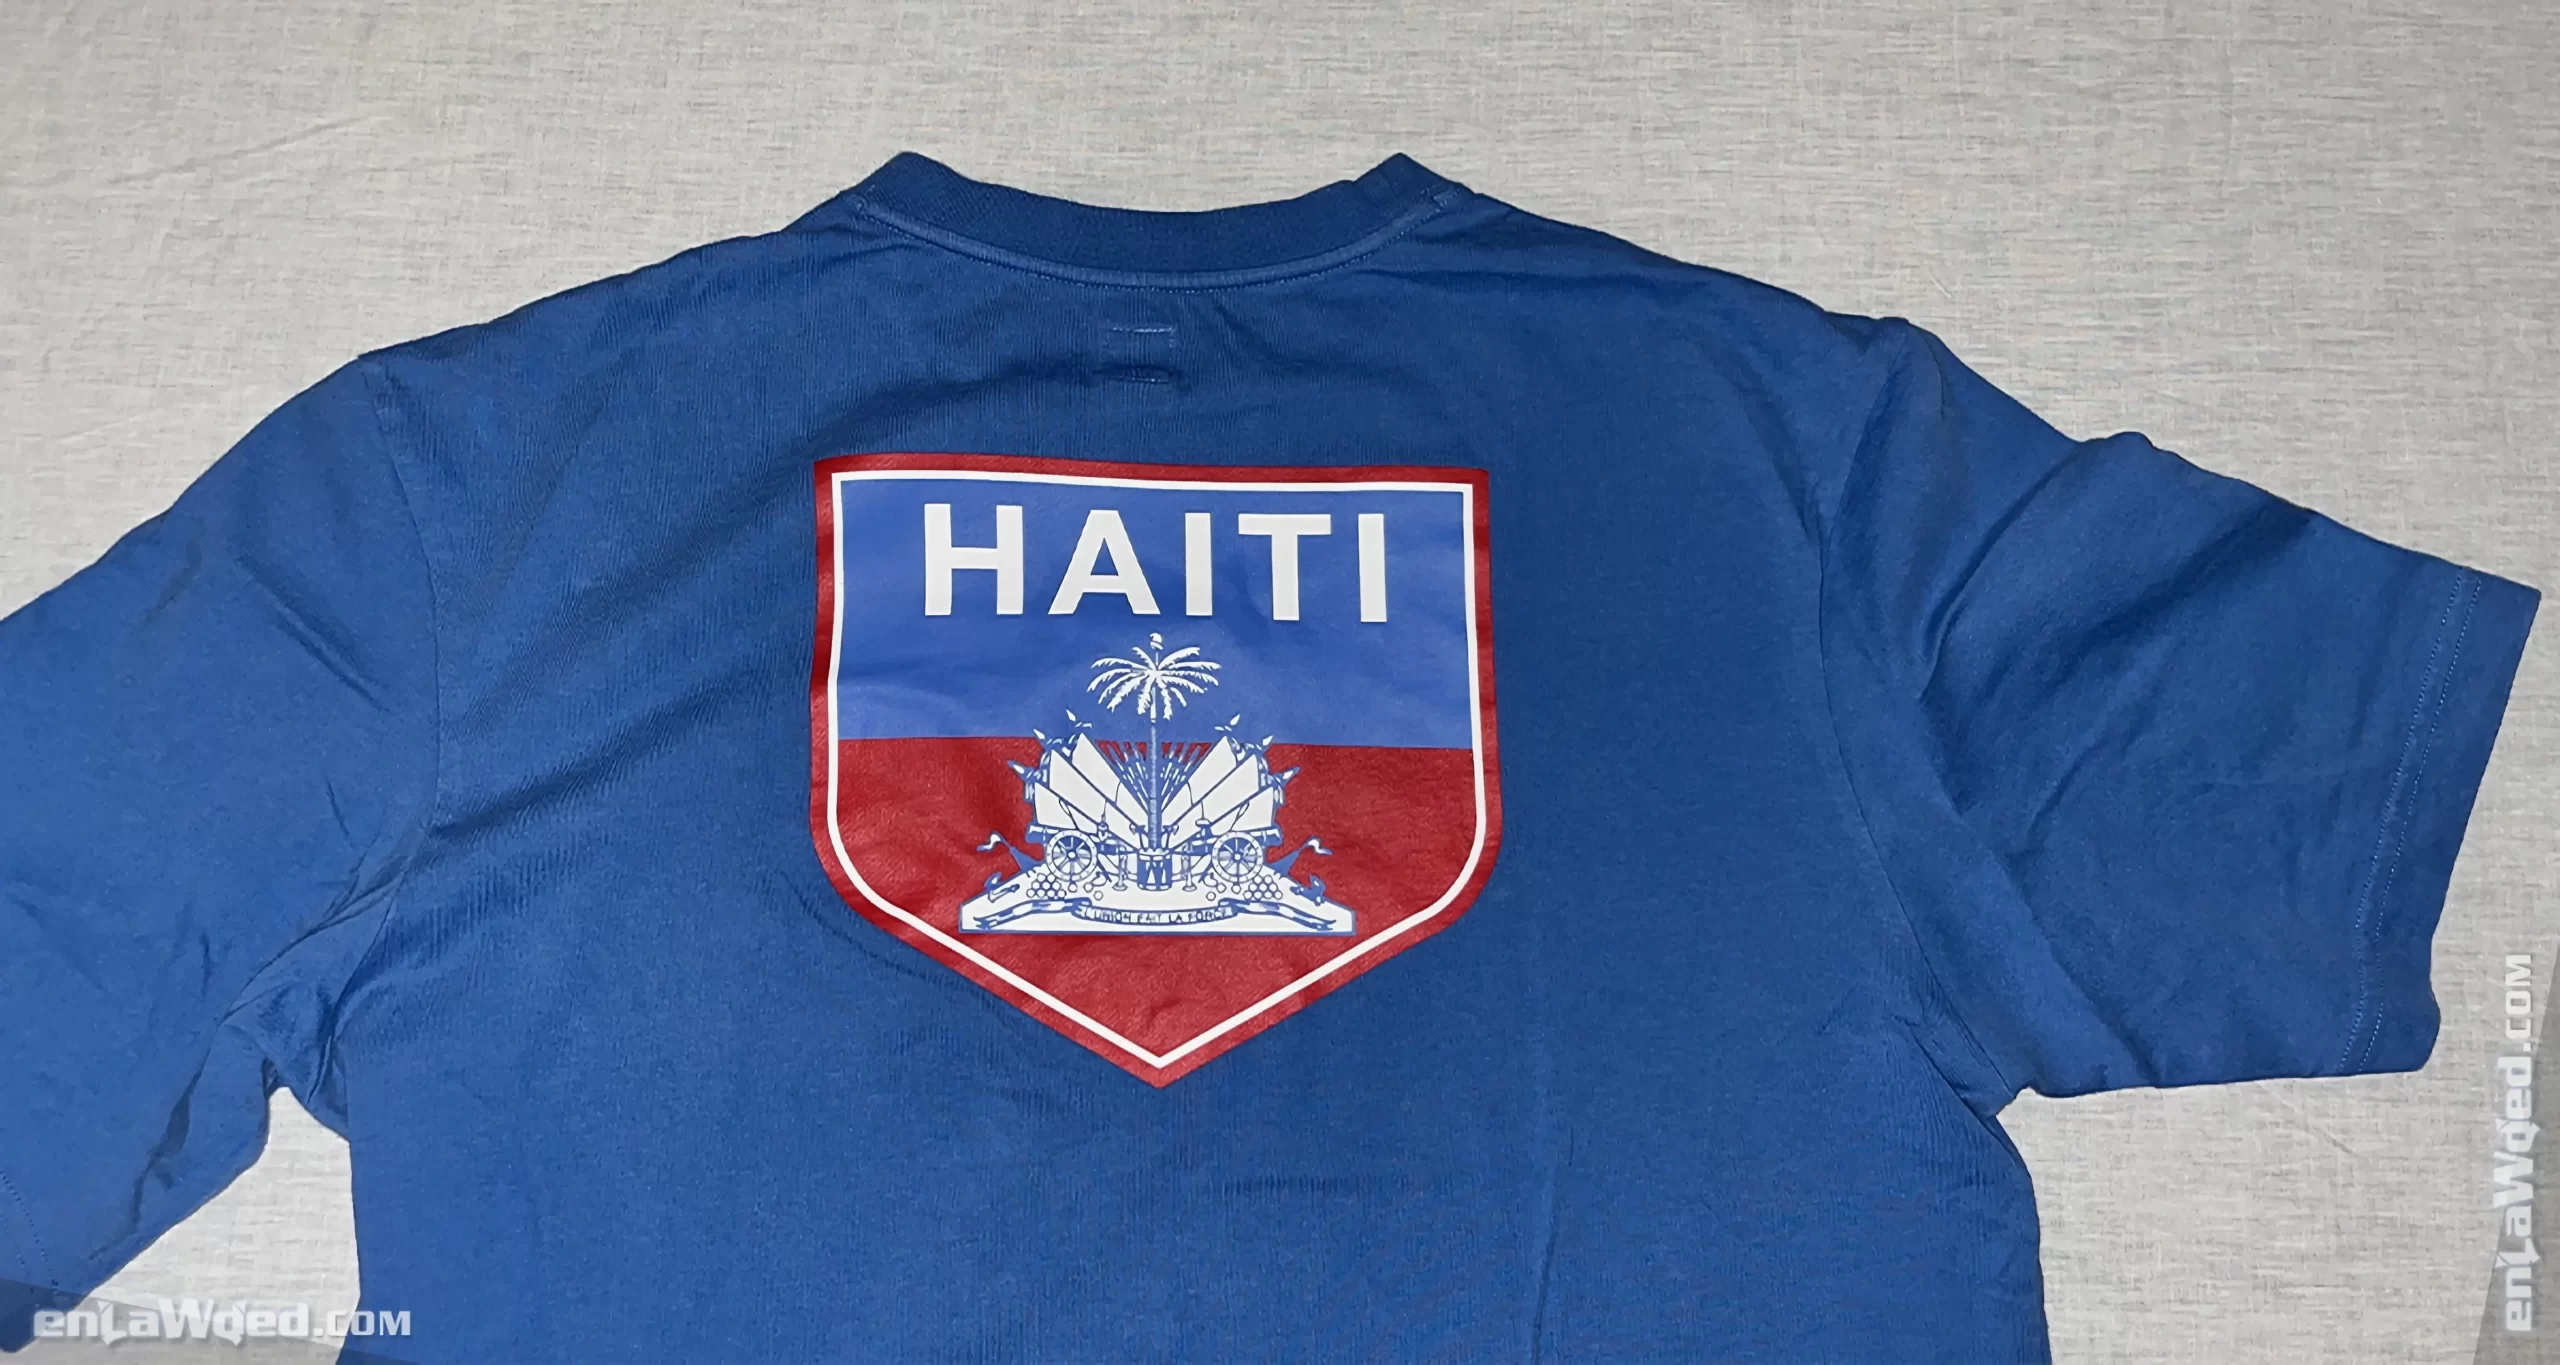 Men’s 2007 Haiti T-Shirt by Adidas Originals: Uplifted (EnLawded.com file #lp1n7ulg126203whyhqrxlmjo)